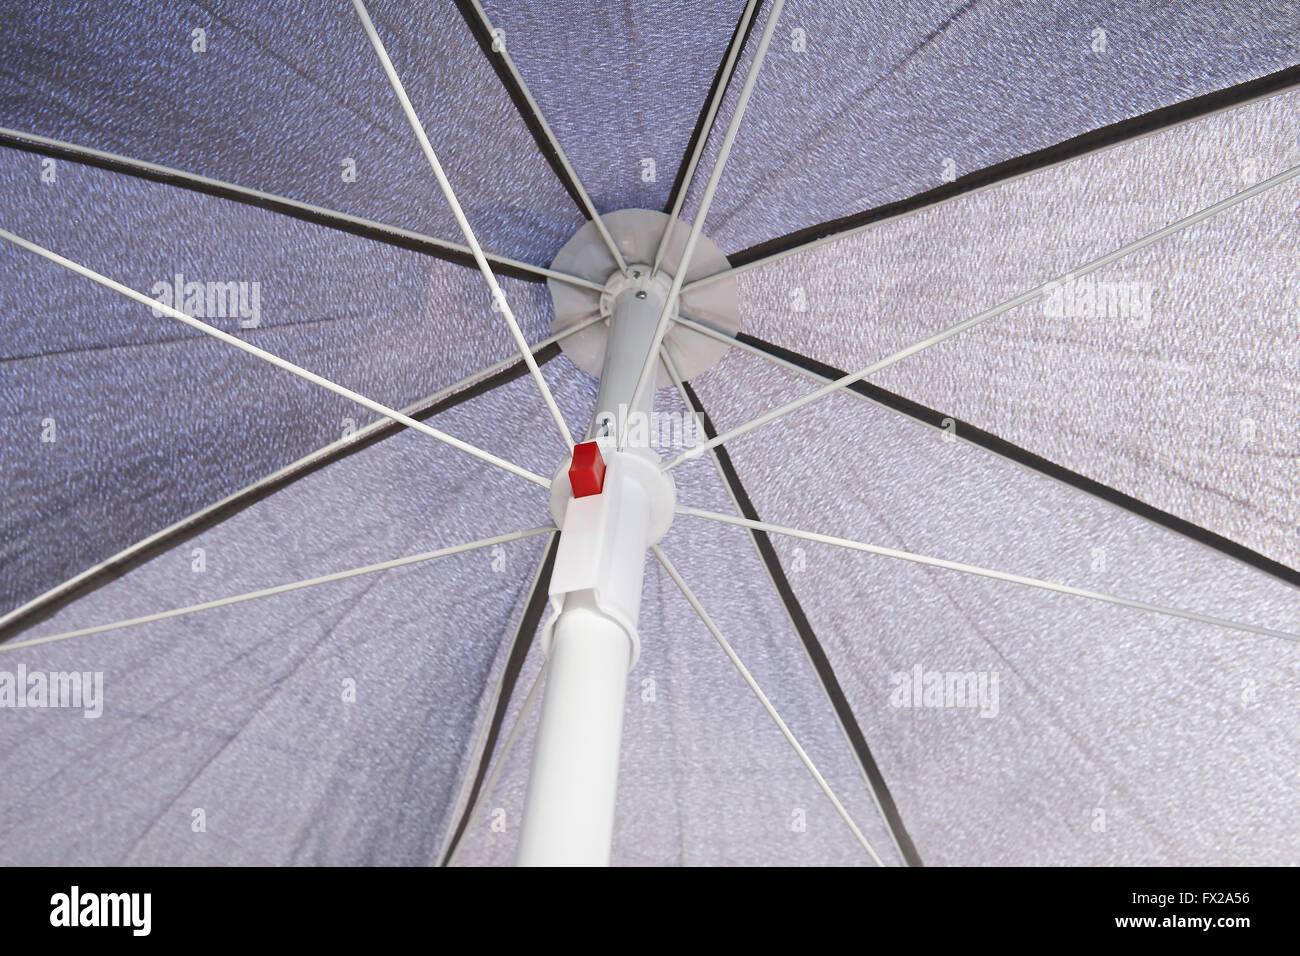 Under a grey sunblock umbrella Stock Photo